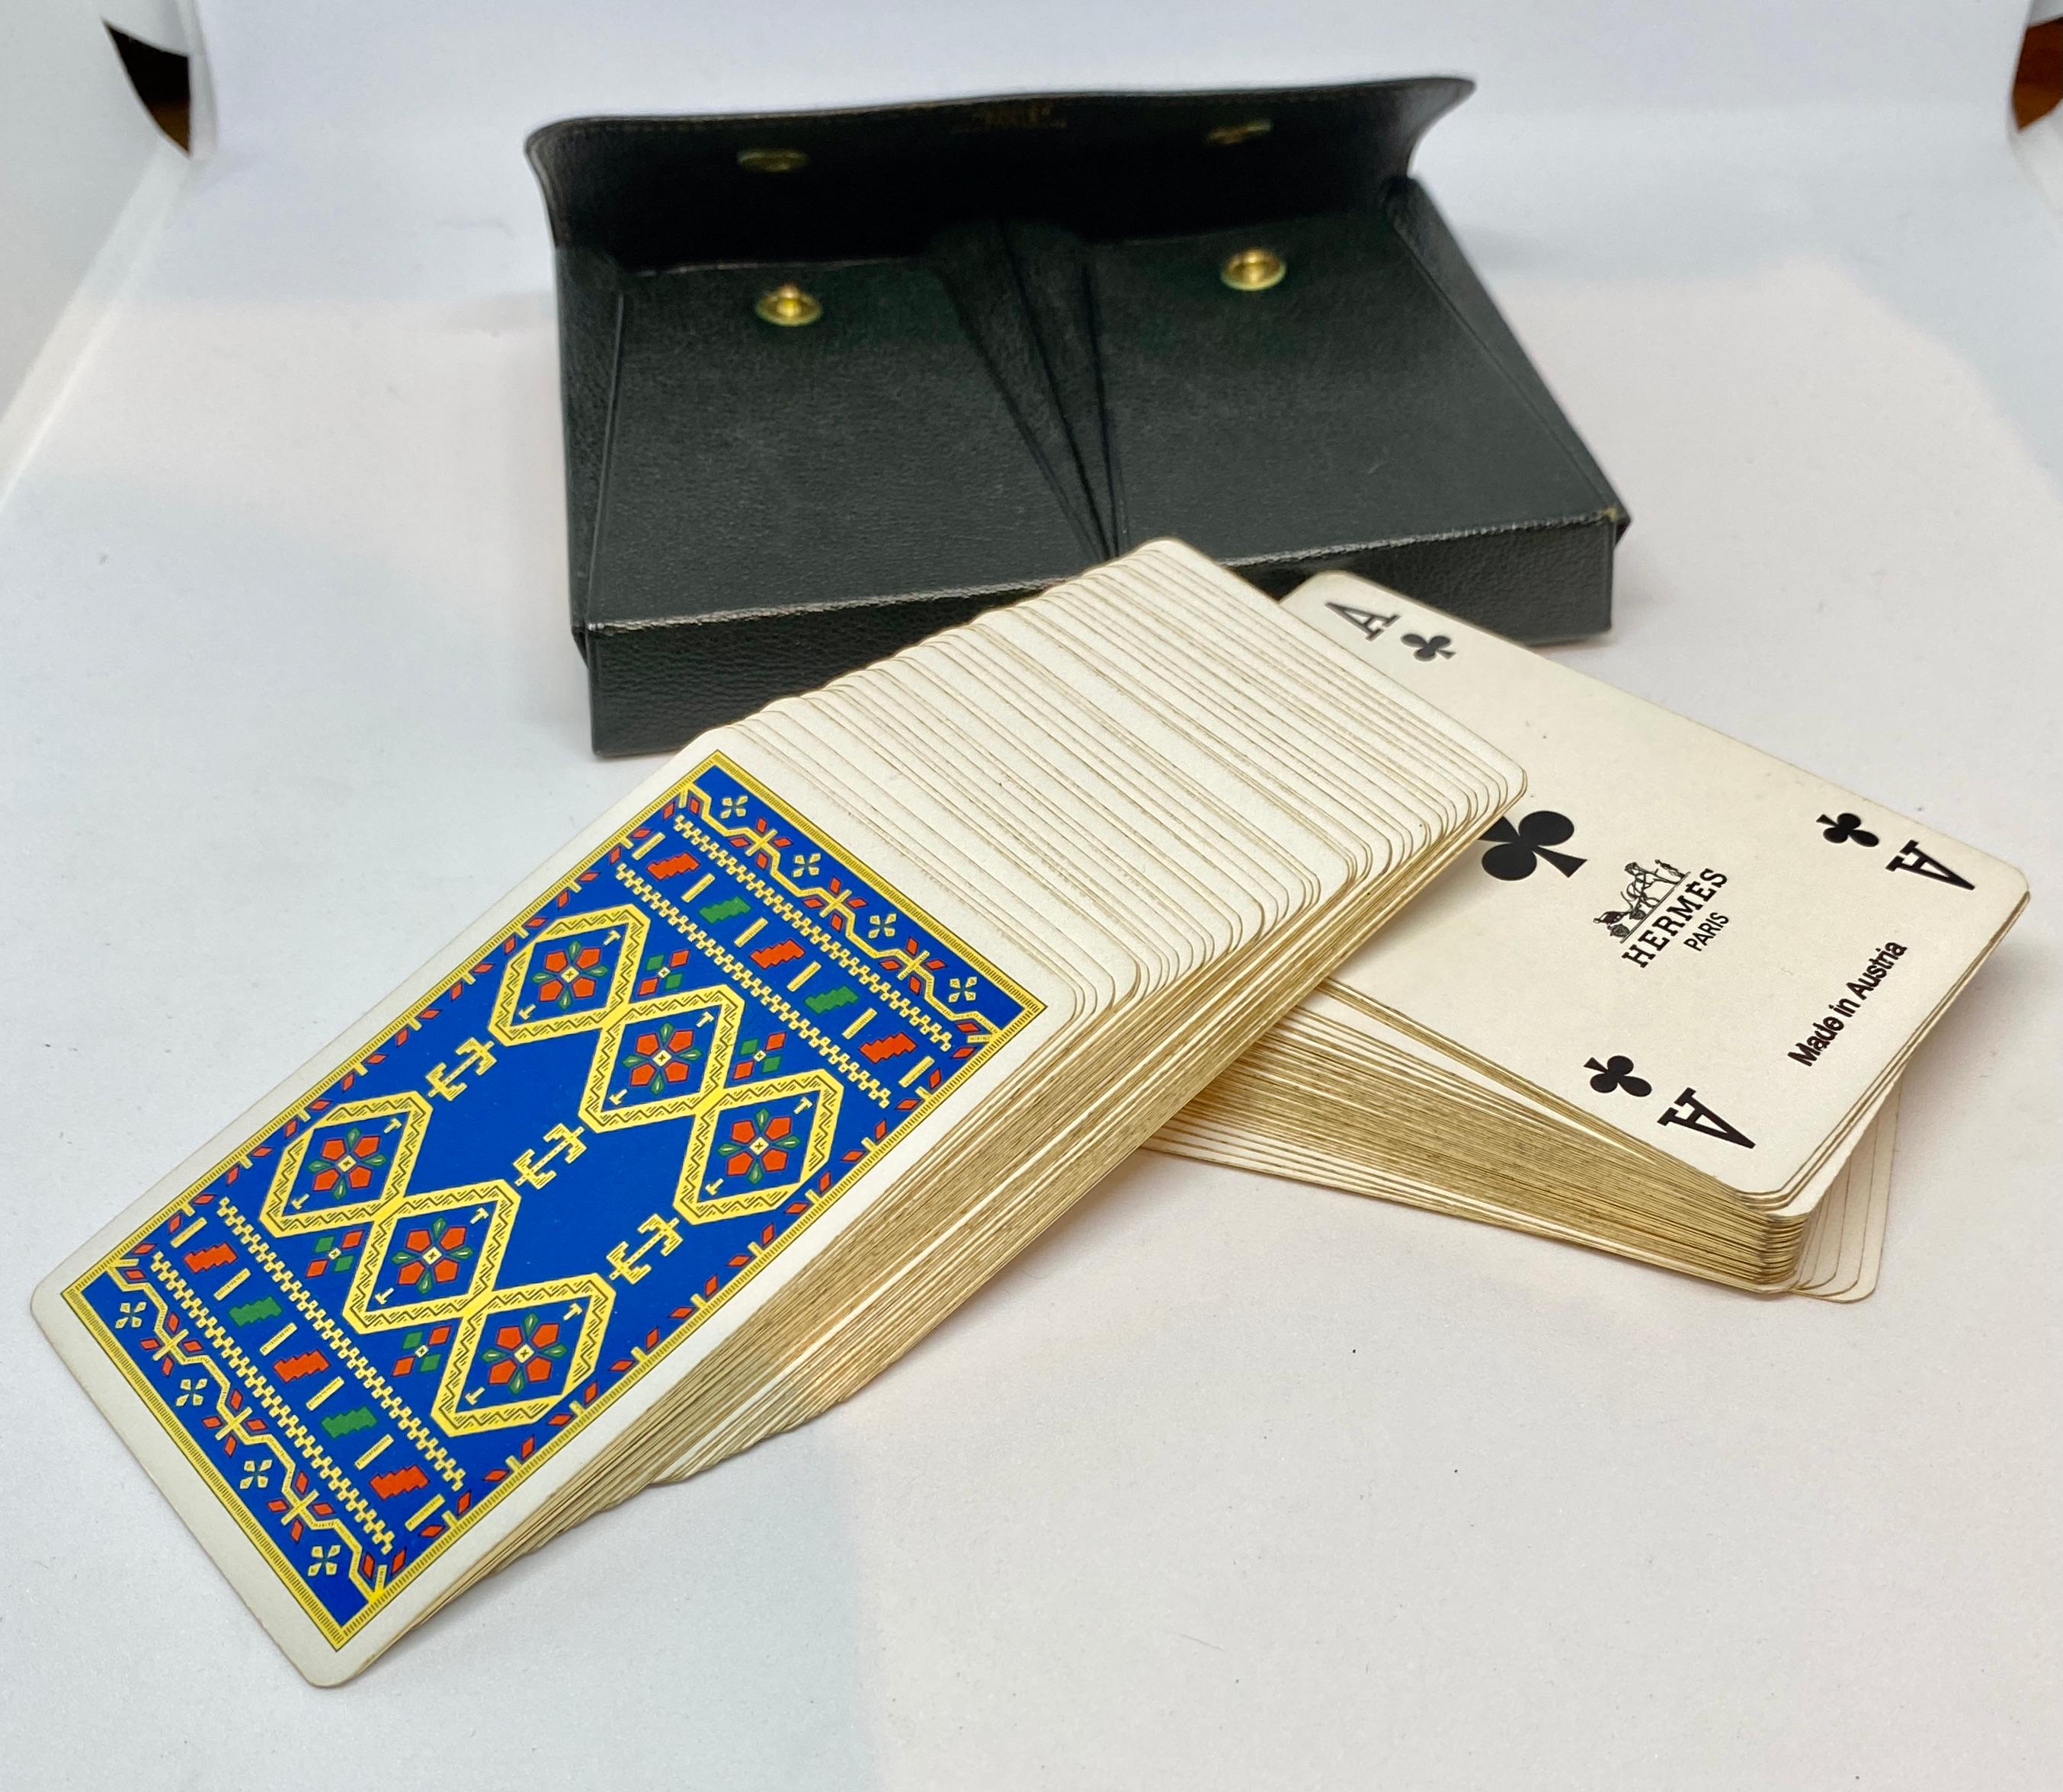 Hermès Bridge Set Playing Cards in Green Leather Case 1